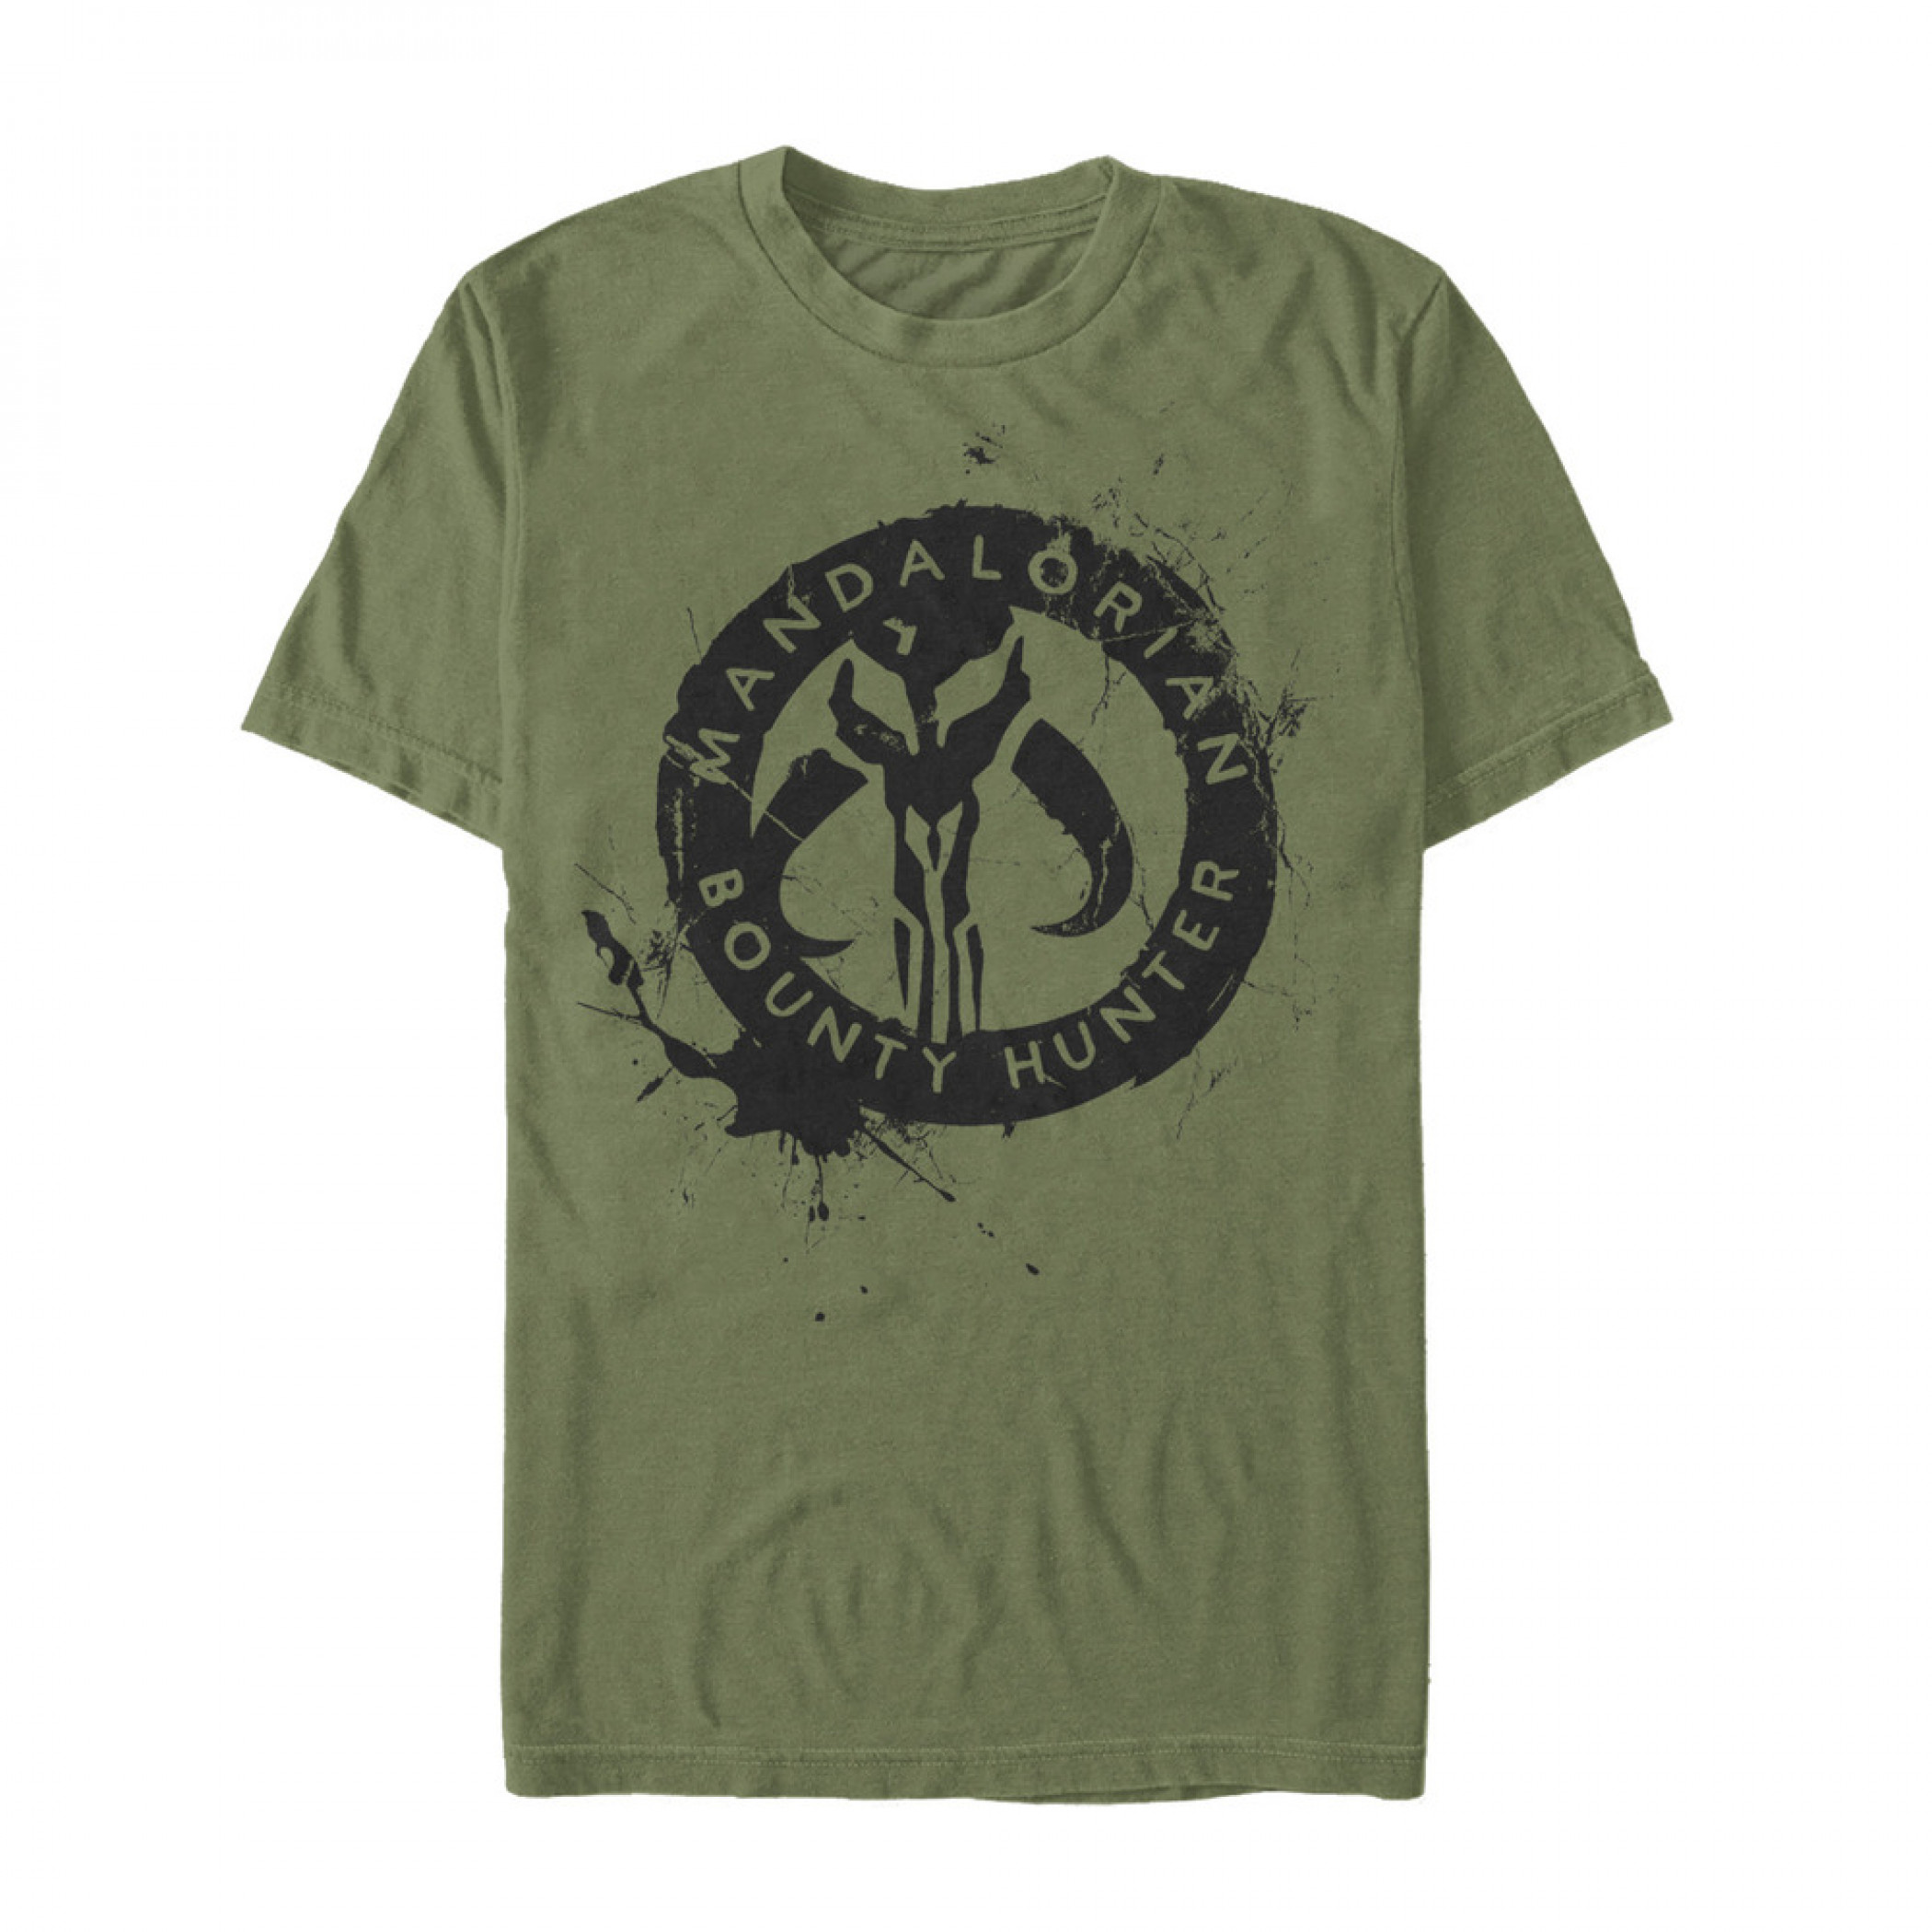 The Mandalorian Bounty Hunter Crest Army Green T-Shirt